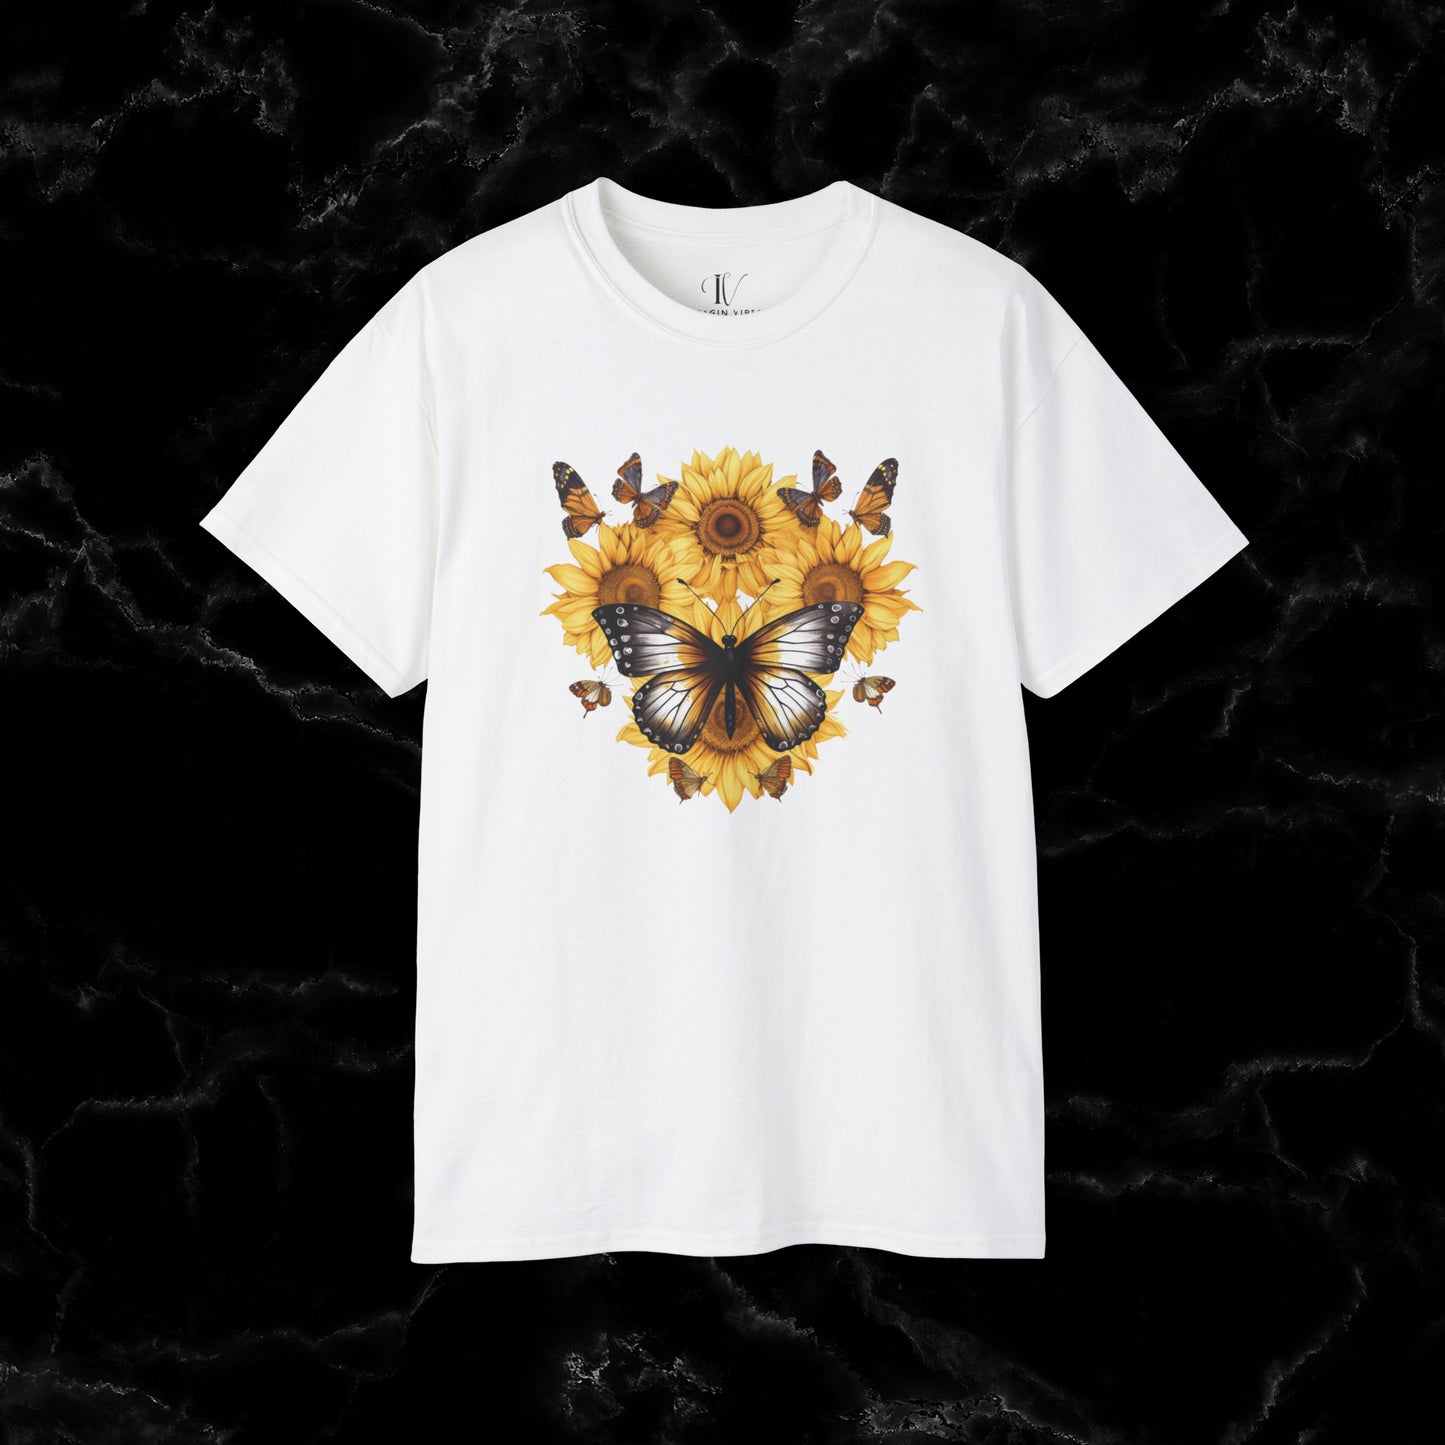 Sunflower Shirt - A Floral Tee, Garden Shirt, and Women's Fall Shirt with Nature-Inspired Design T-Shirt White S 